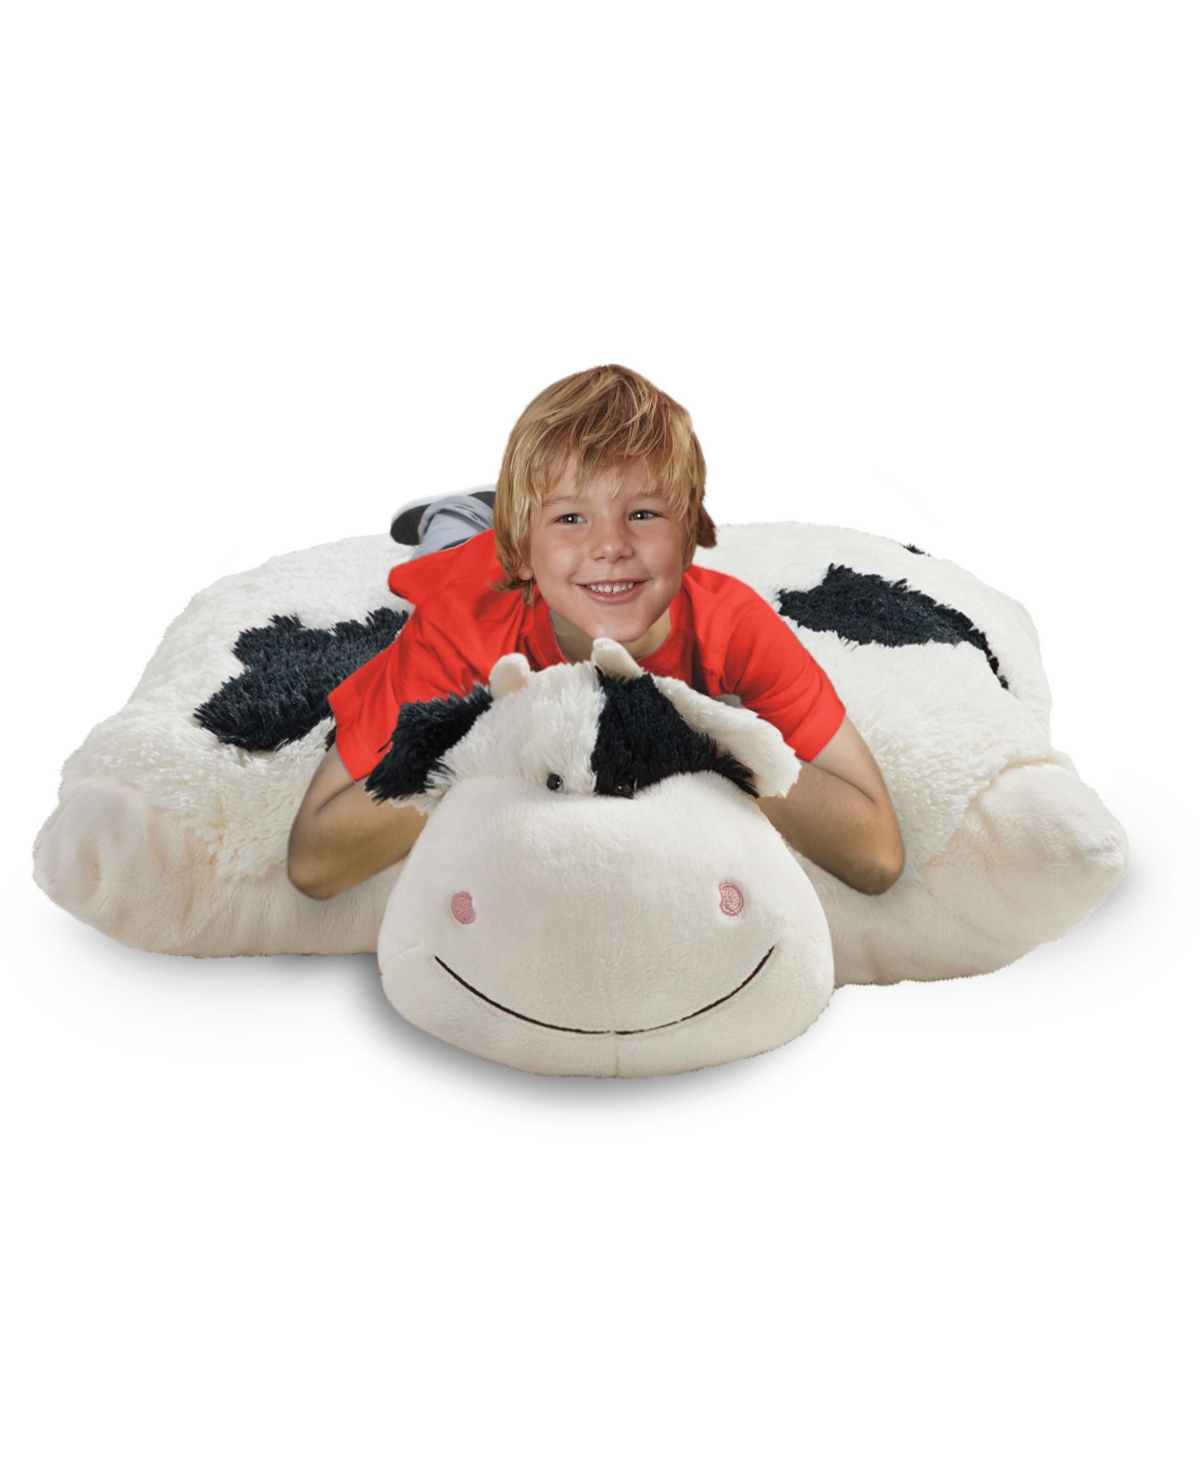 Pillow Pets Signature Jumboz Cozy Cow Oversized Stuffed Animal Plush Toy In White